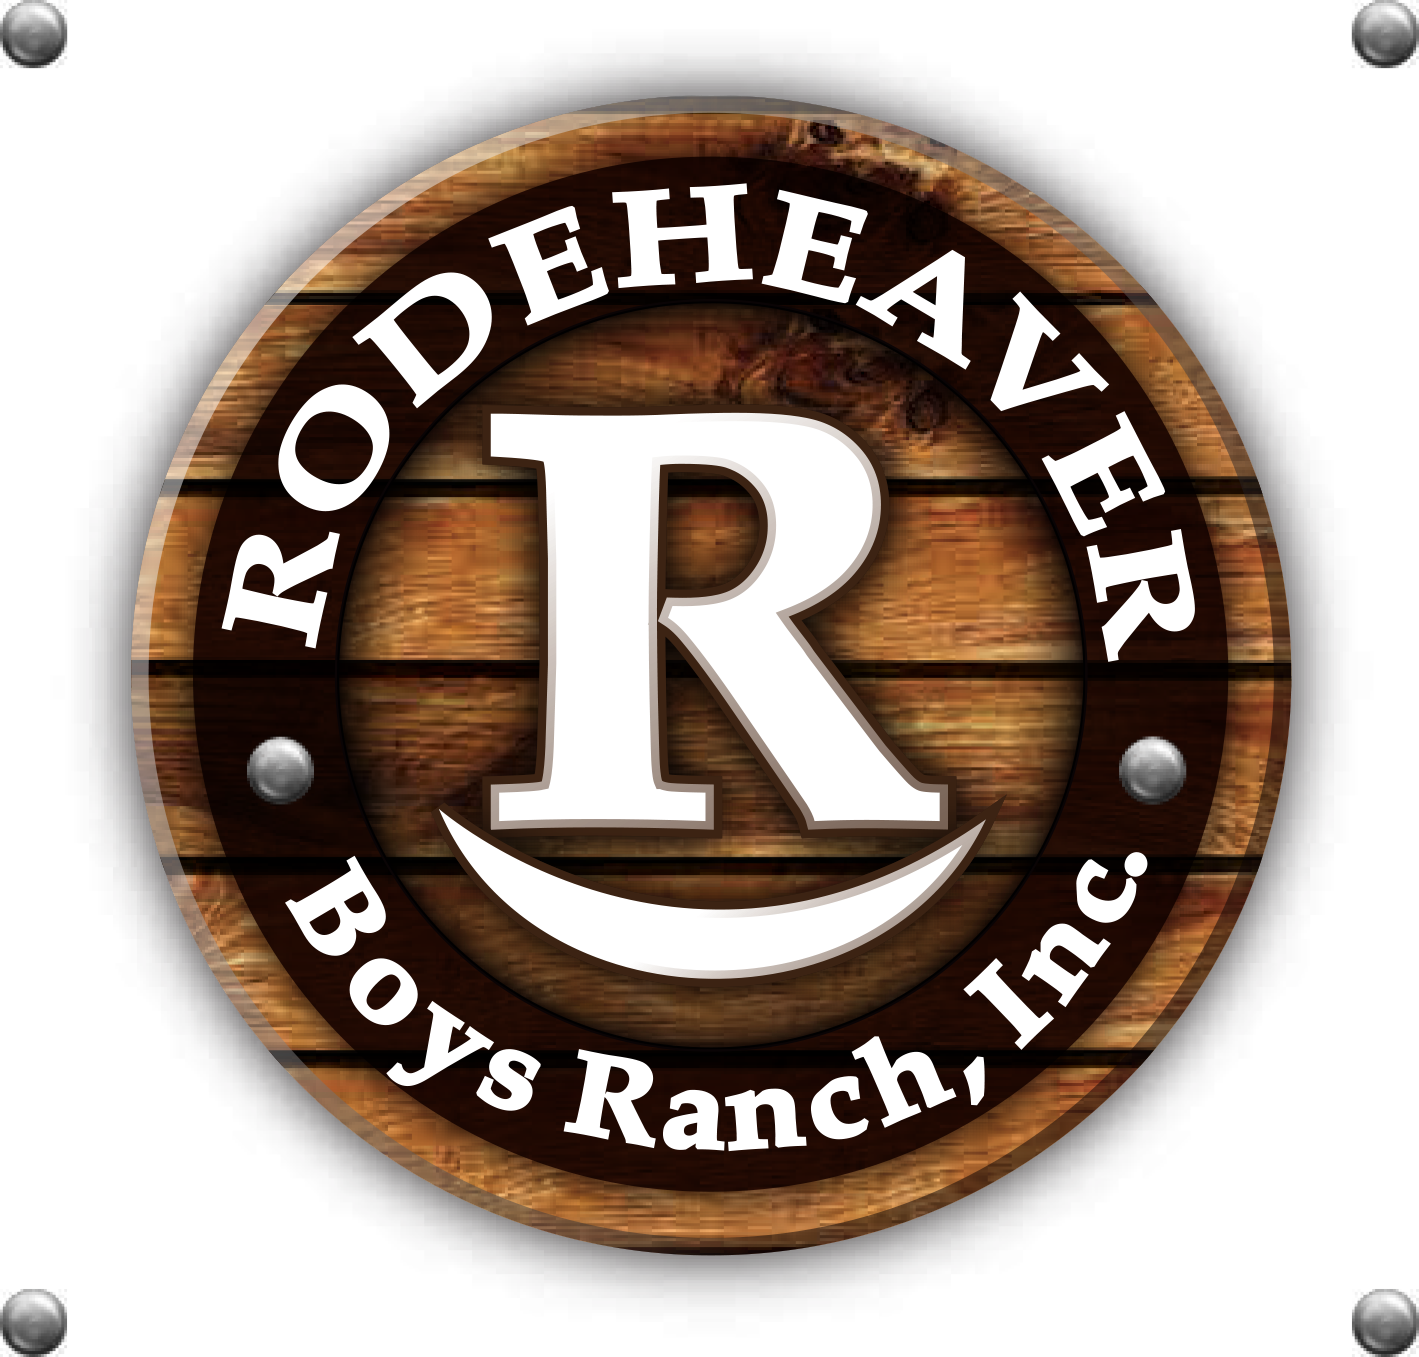 Annual Rodeheaver Boys Ranch Clay Target Shoot 3 - Rodeheaver Boys Ranch